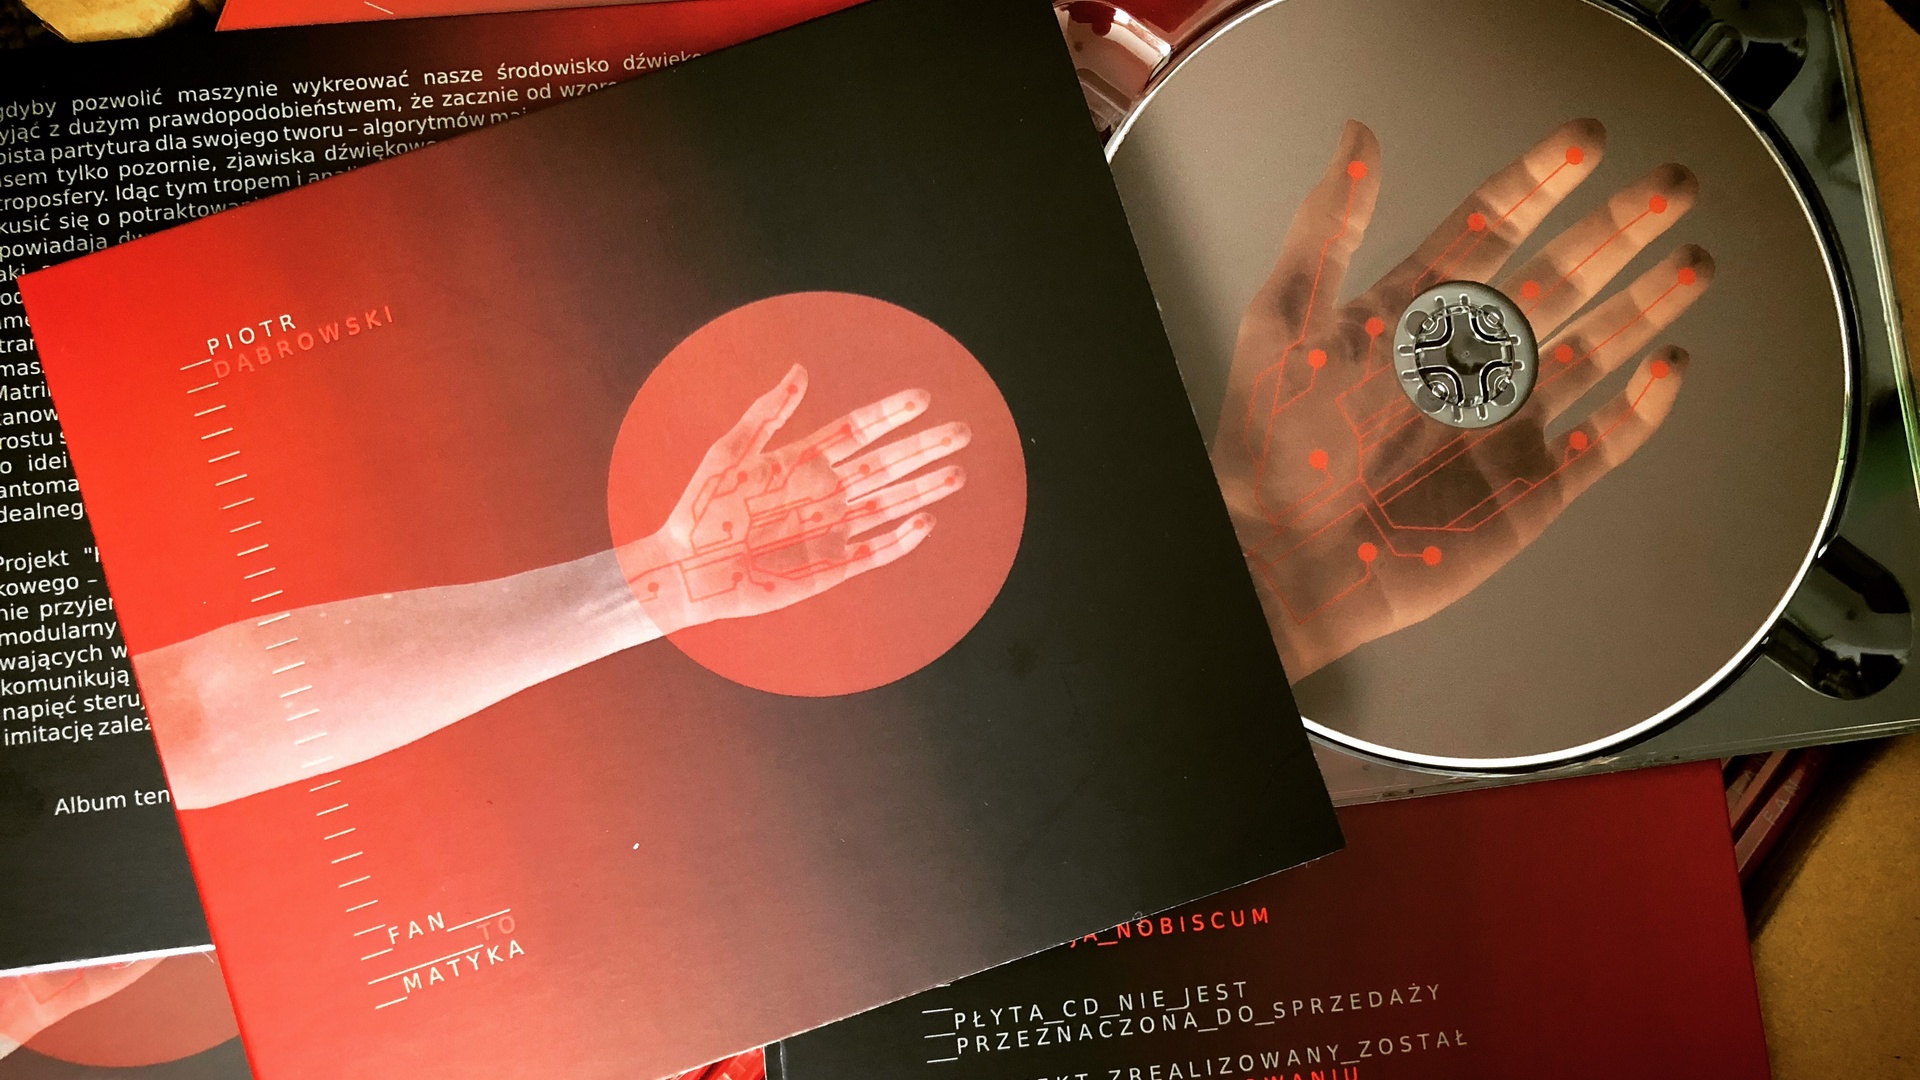 “Fantomatyka” online and released on CD